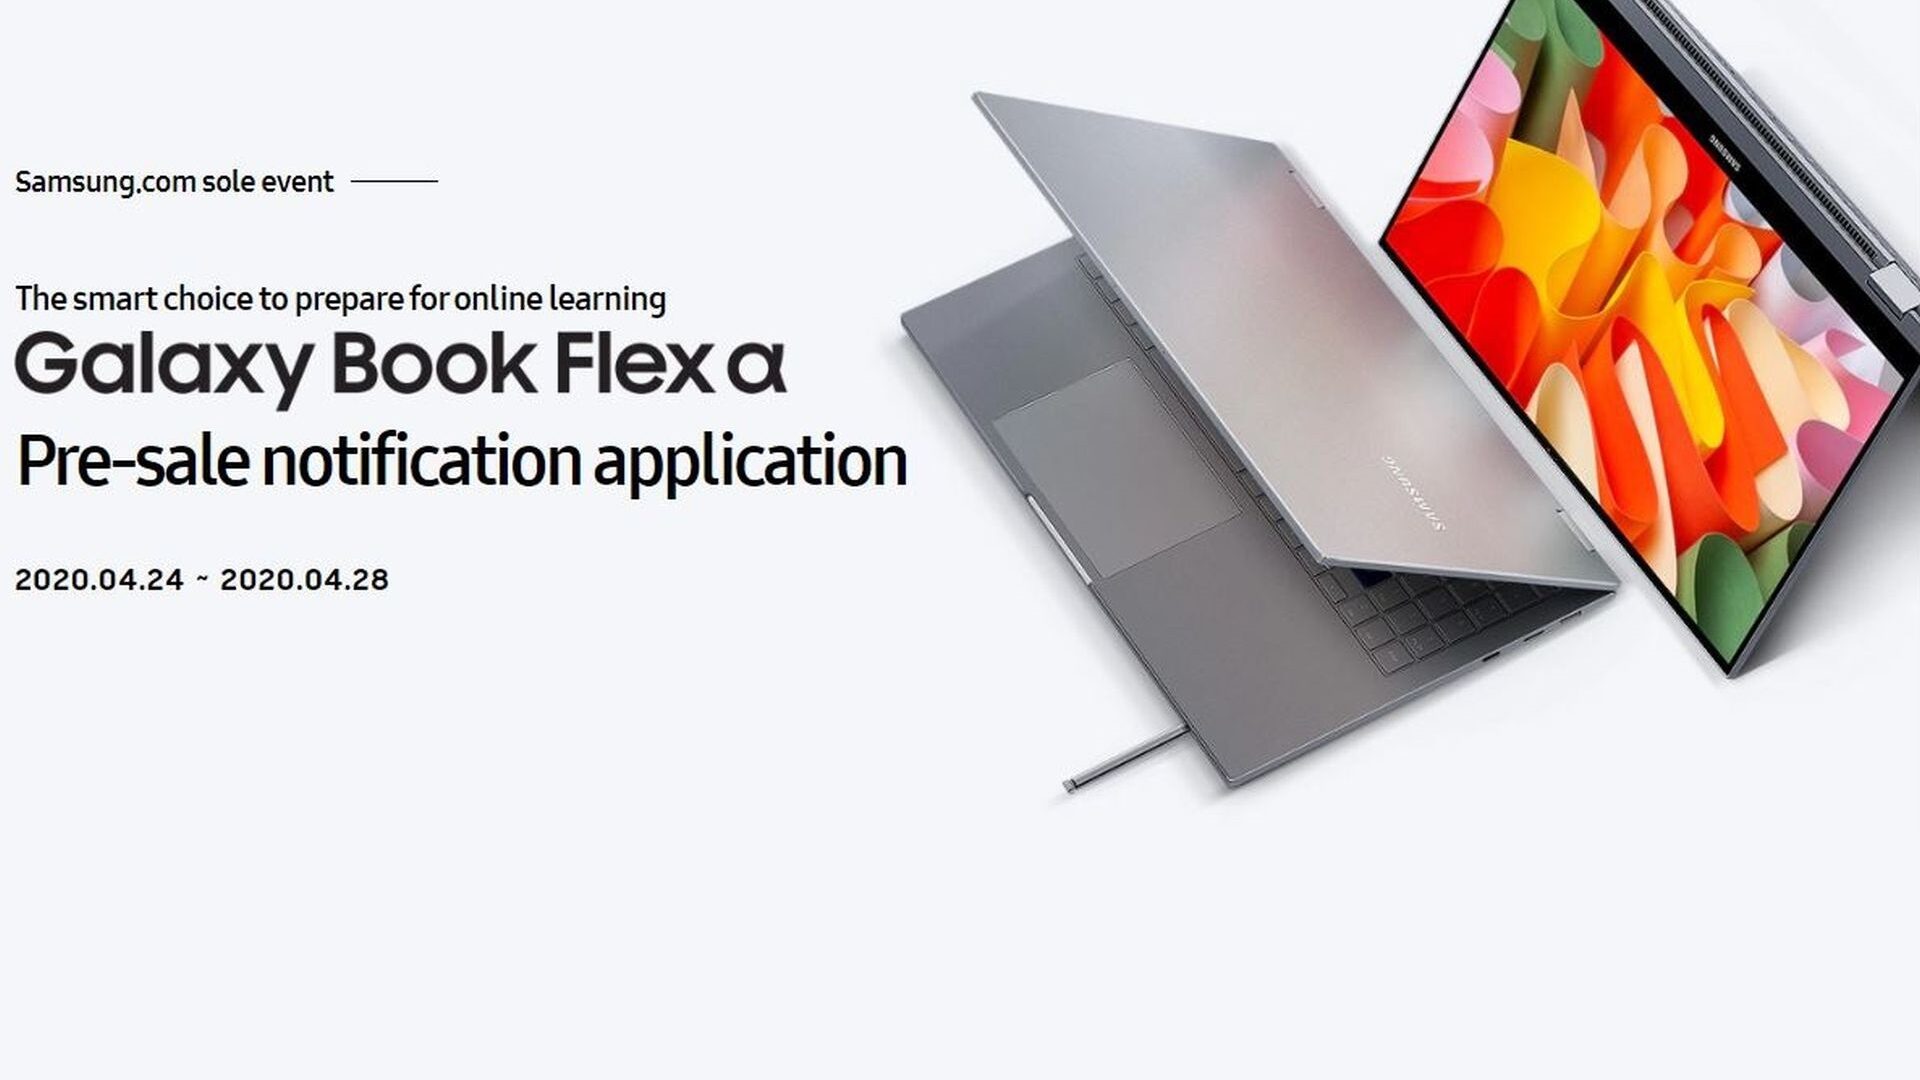 Galaxy Book Flex alpha is around the corner as pre-sales go live